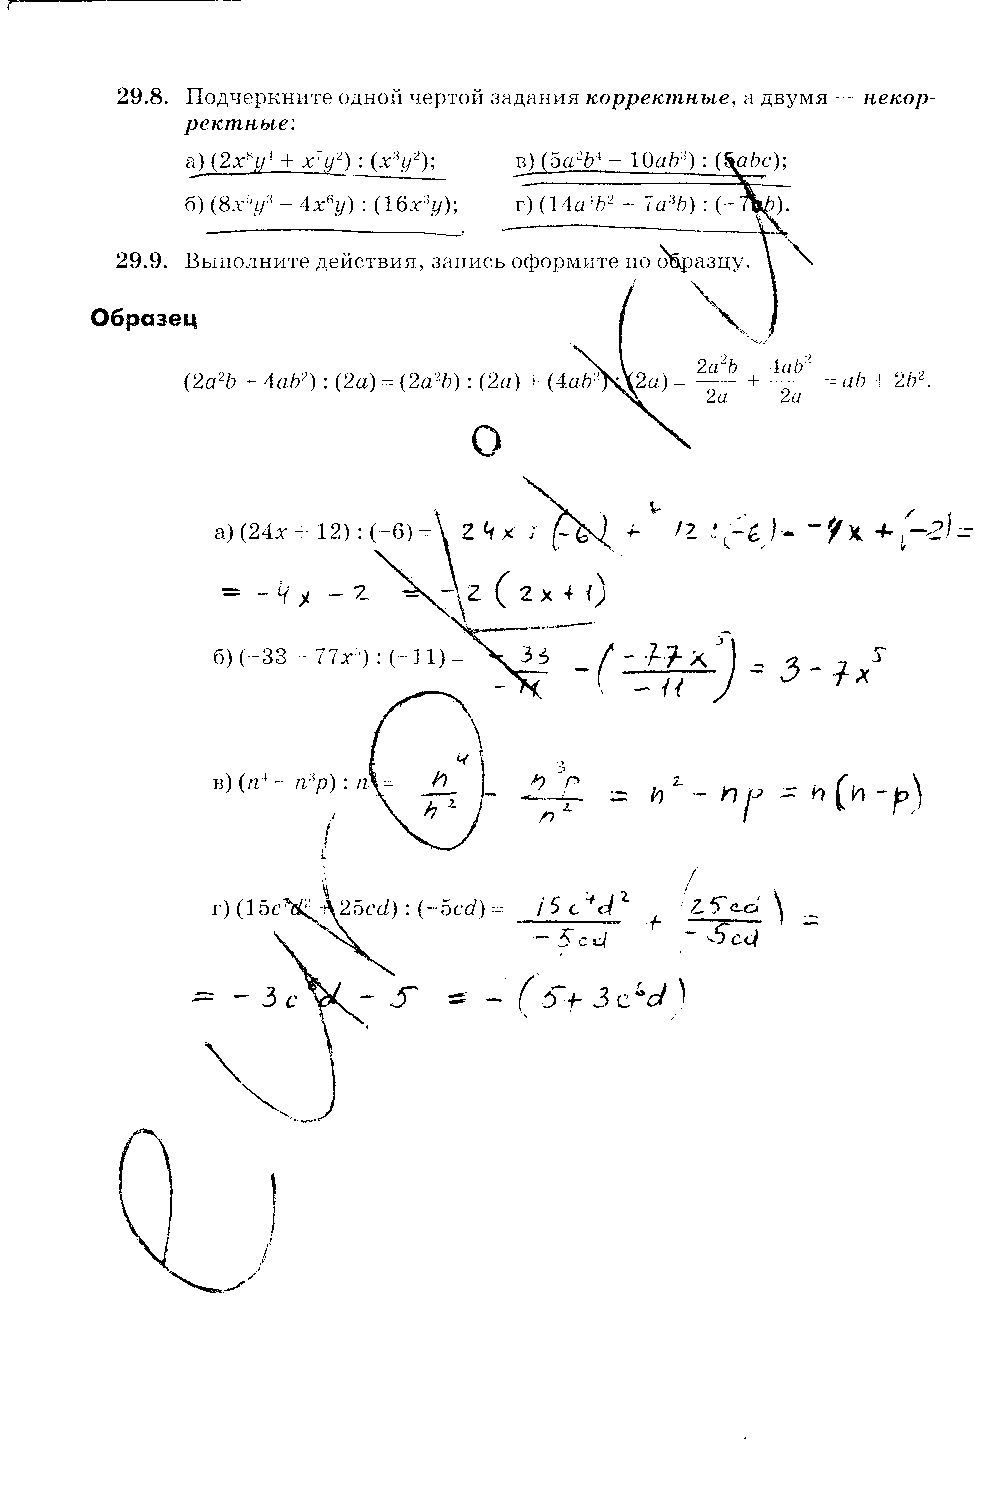 ГДЗ Алгебра 7 класс - стр. 46